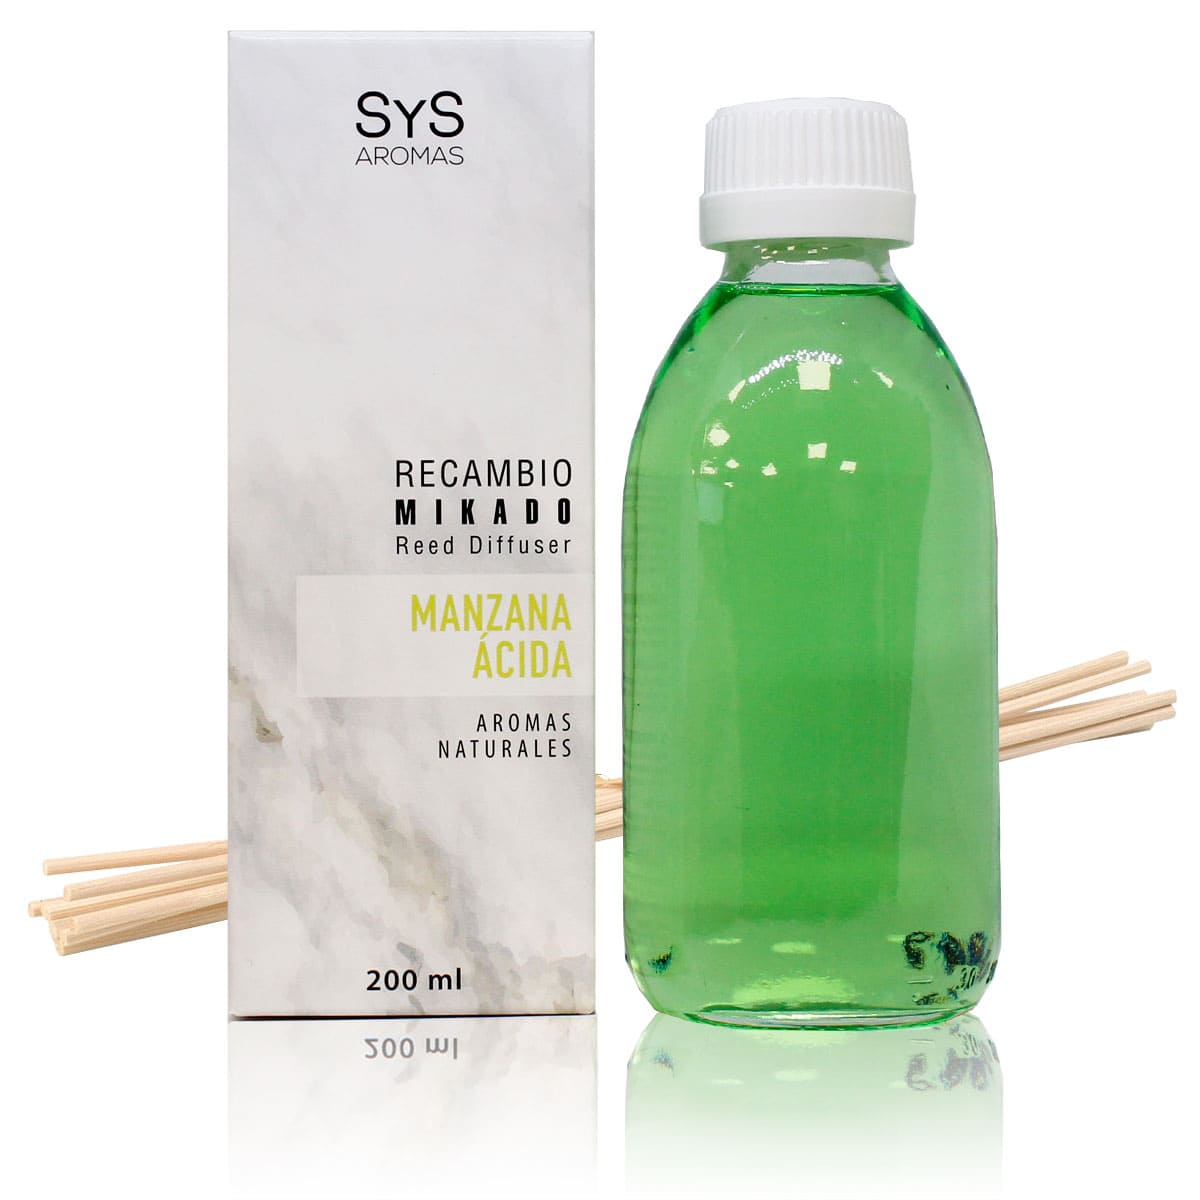 Comprar Recambio Mikado SyS Manzana Acida 200ml + Palos, SYS Aromas